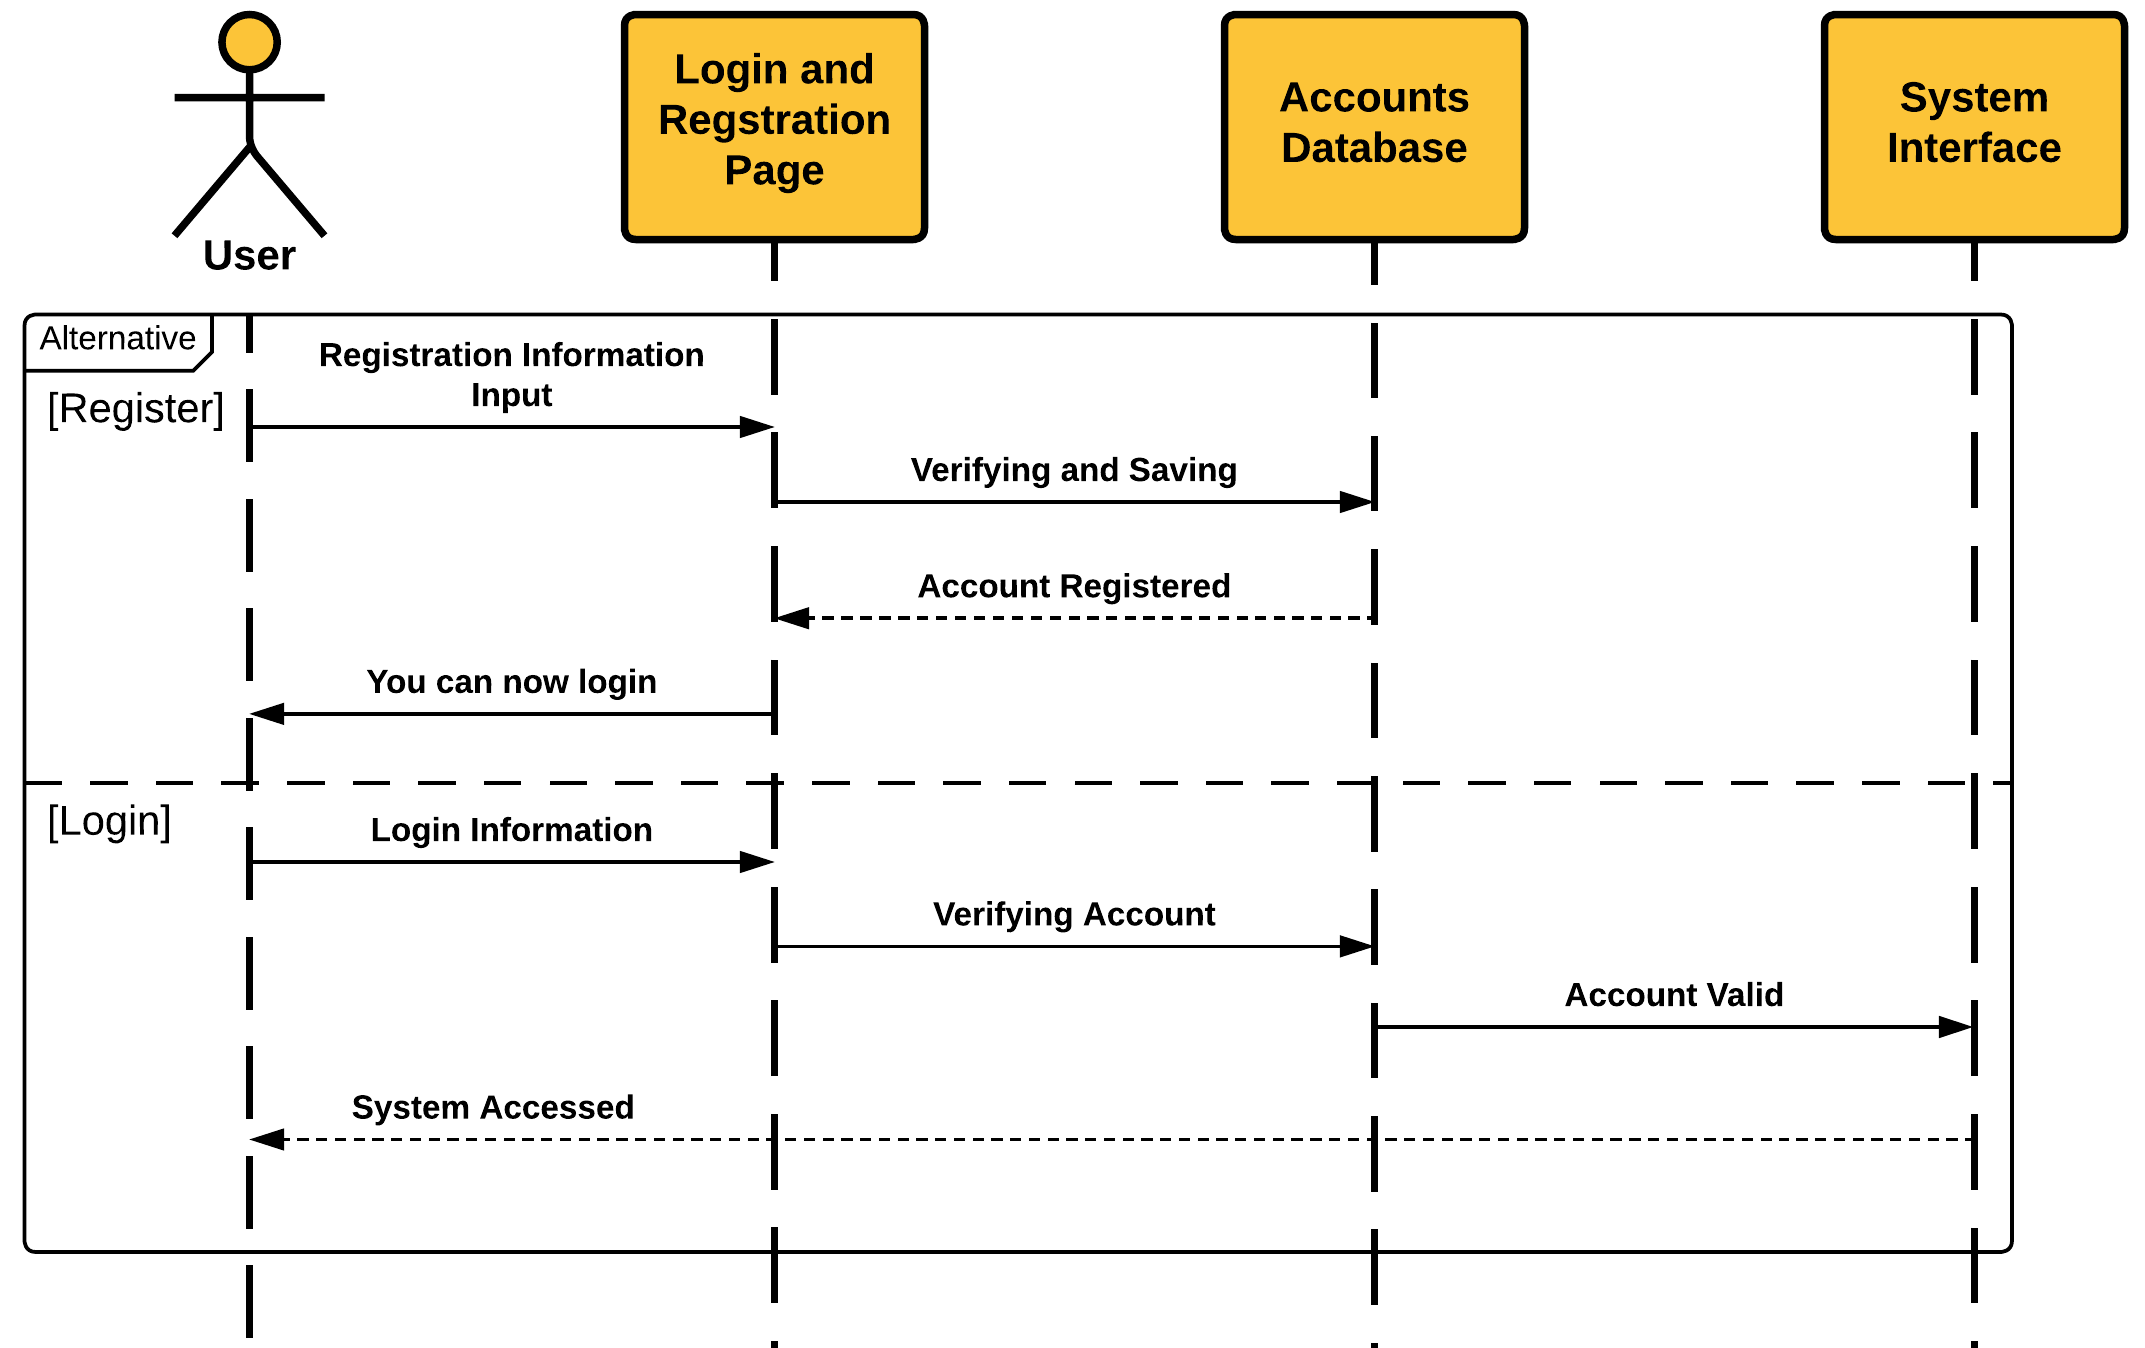 Login and Registration System Sequence Diagram - Alternative